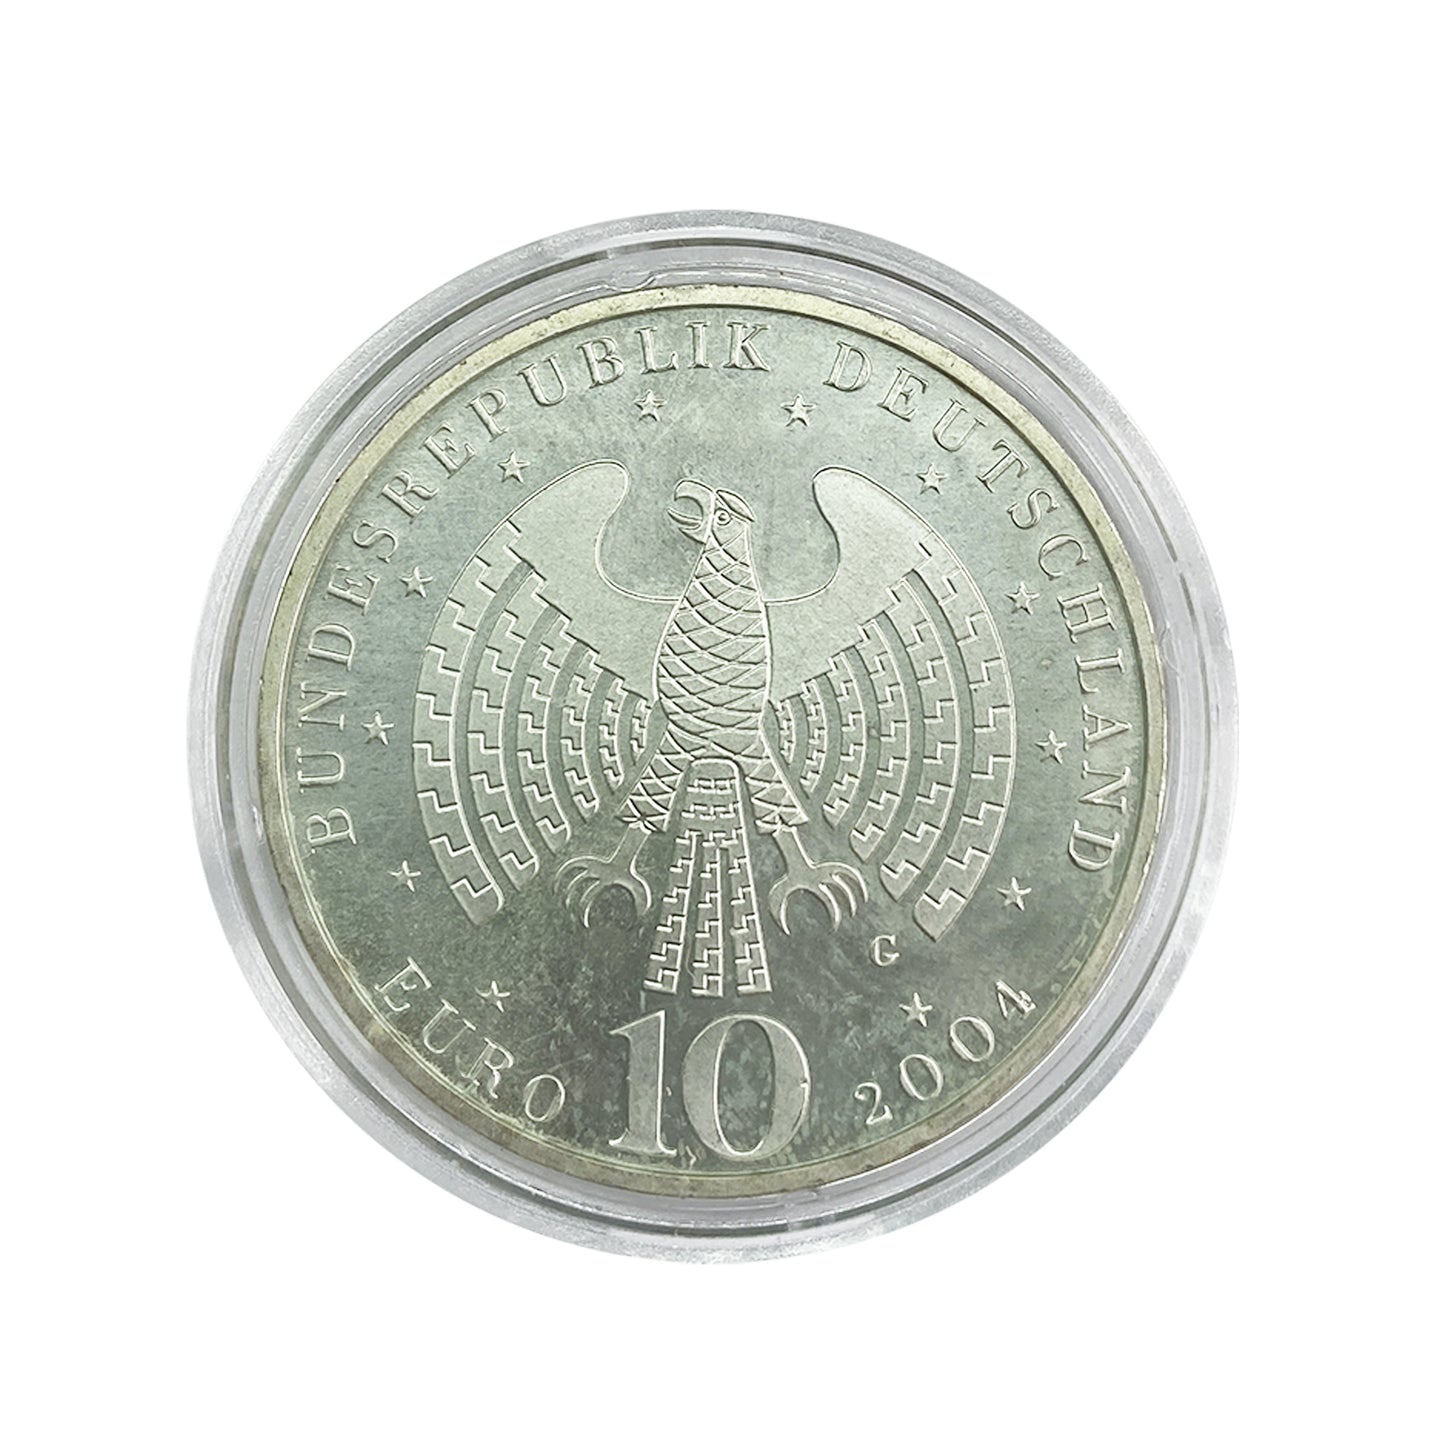 Alemania - Moneda 10 euros plata 2004 - Ampliación de la Unión Europea